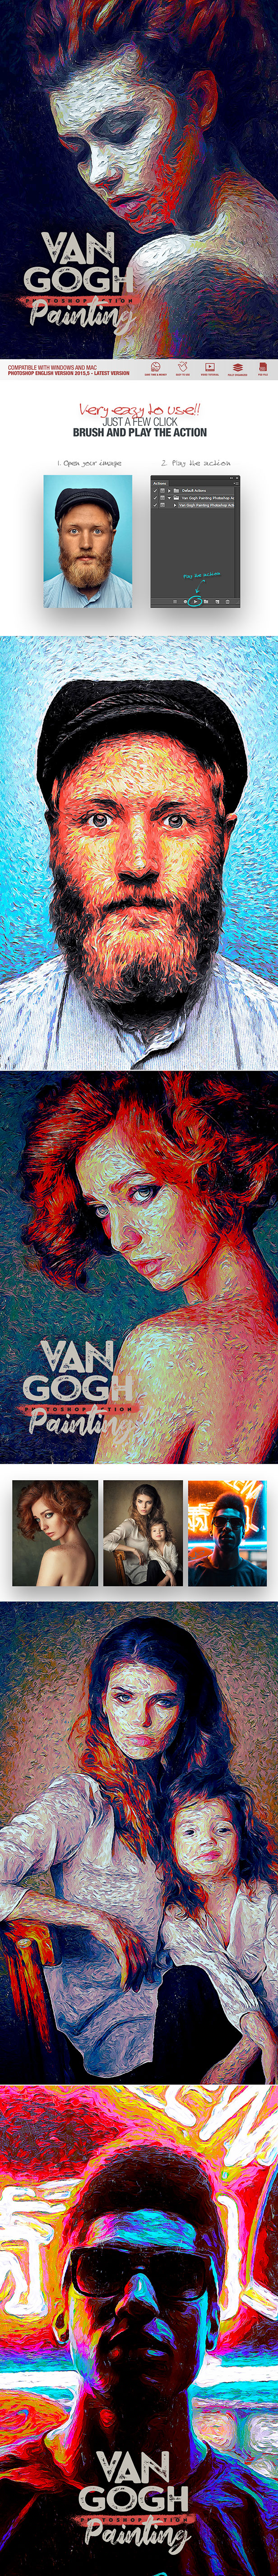 Van Gogh Painting Photoshop Action - 15